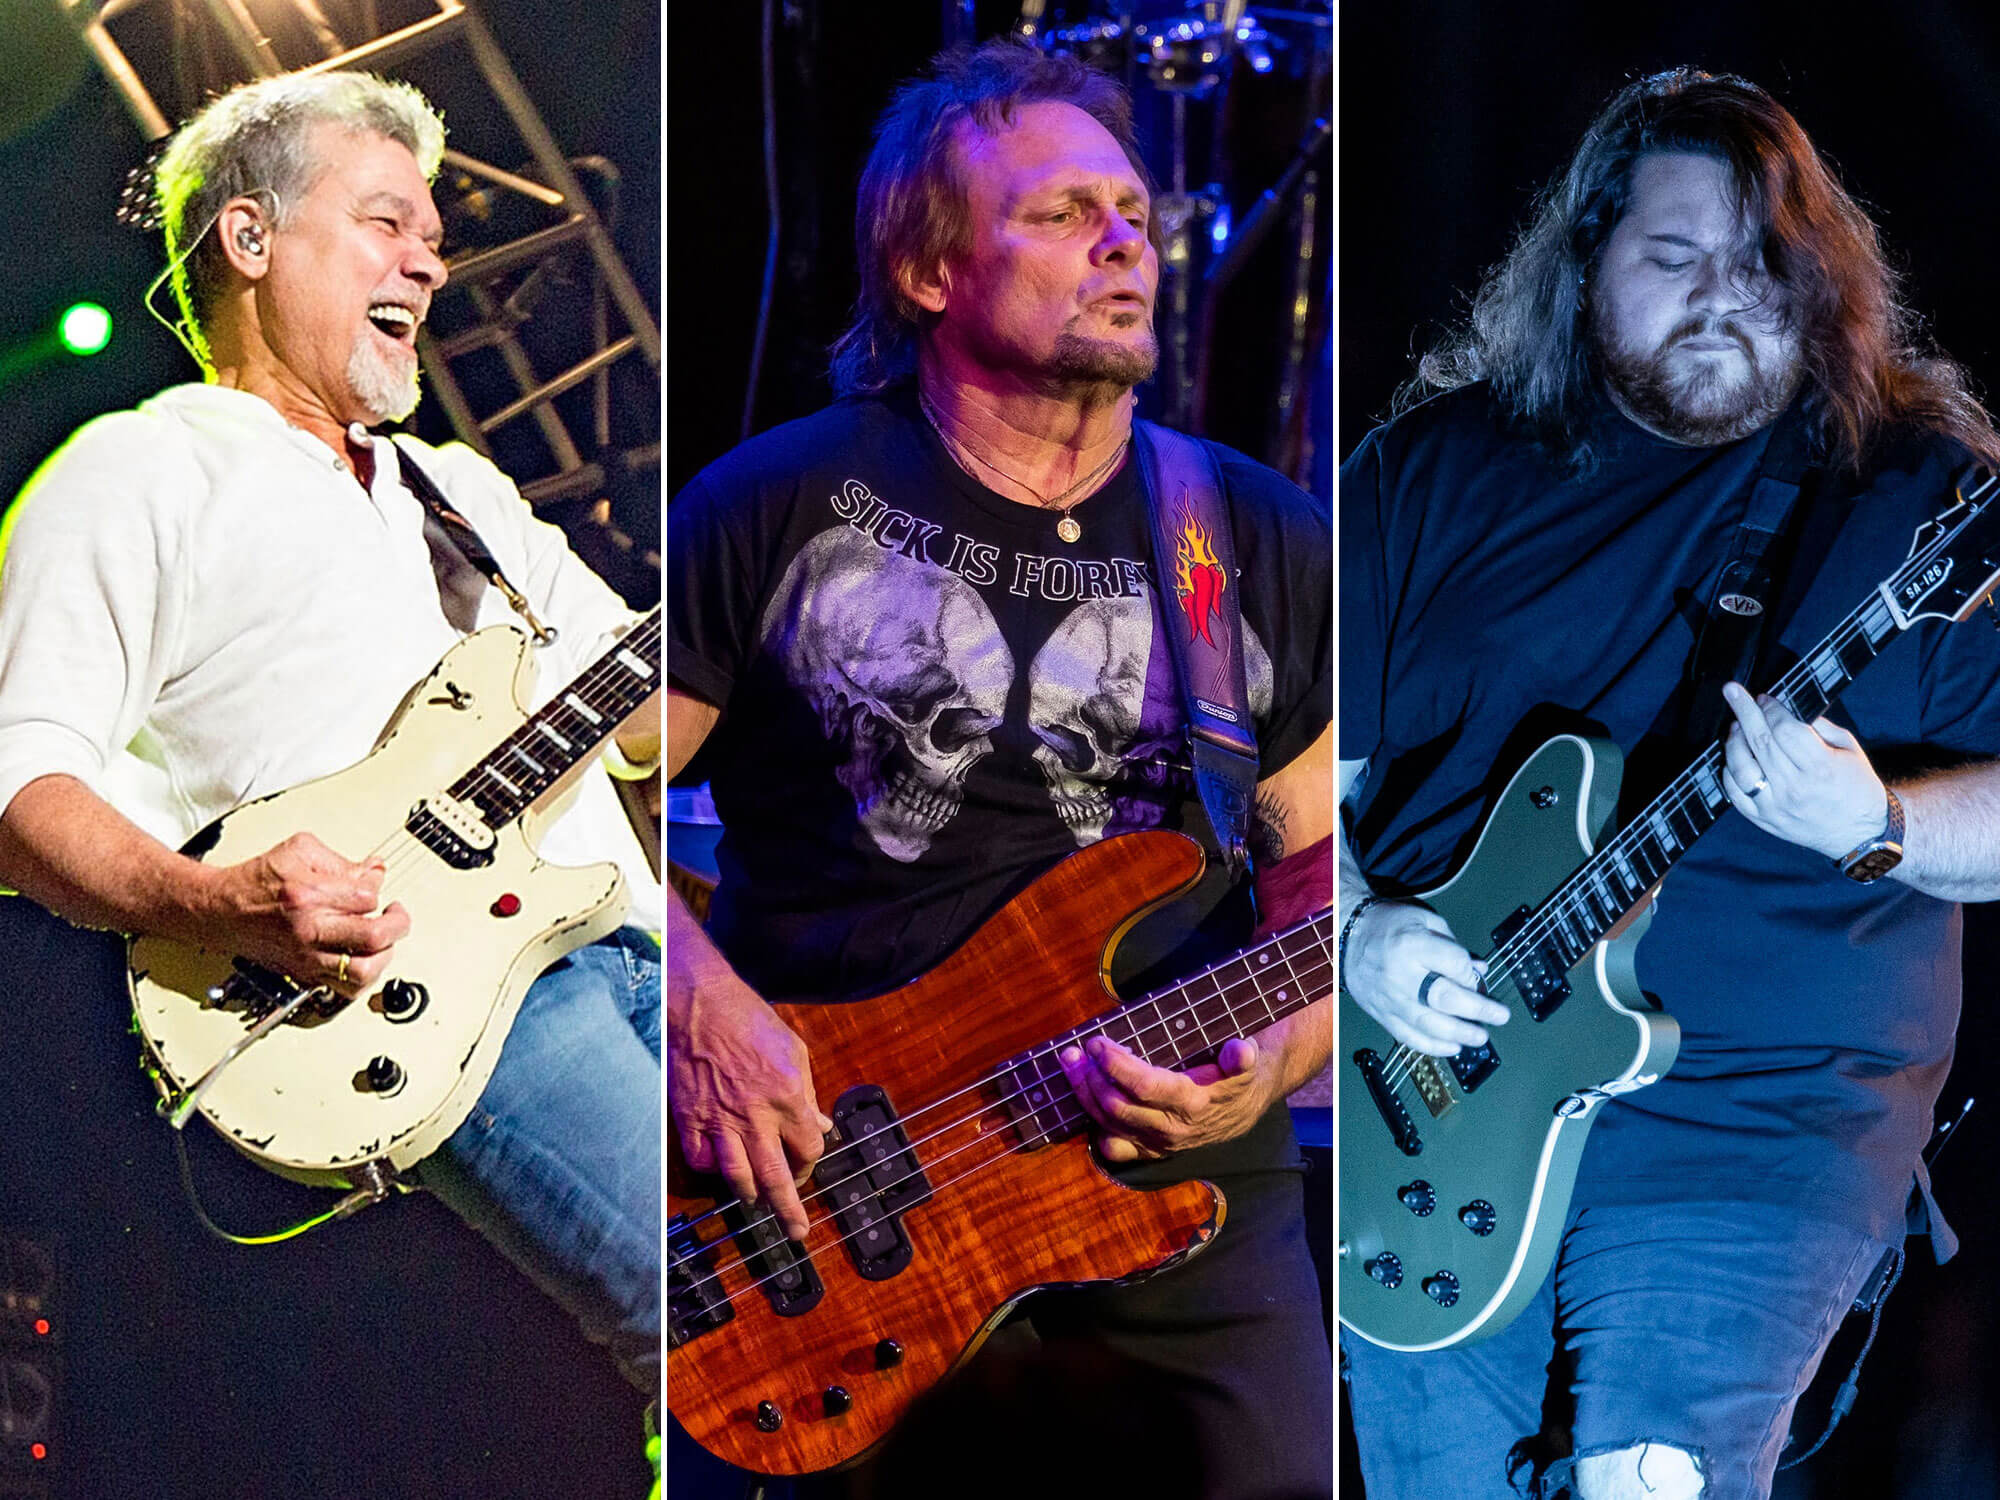 [L-R] Eddie Van Halen, Michael Anthony and Wolfgang Van Halen